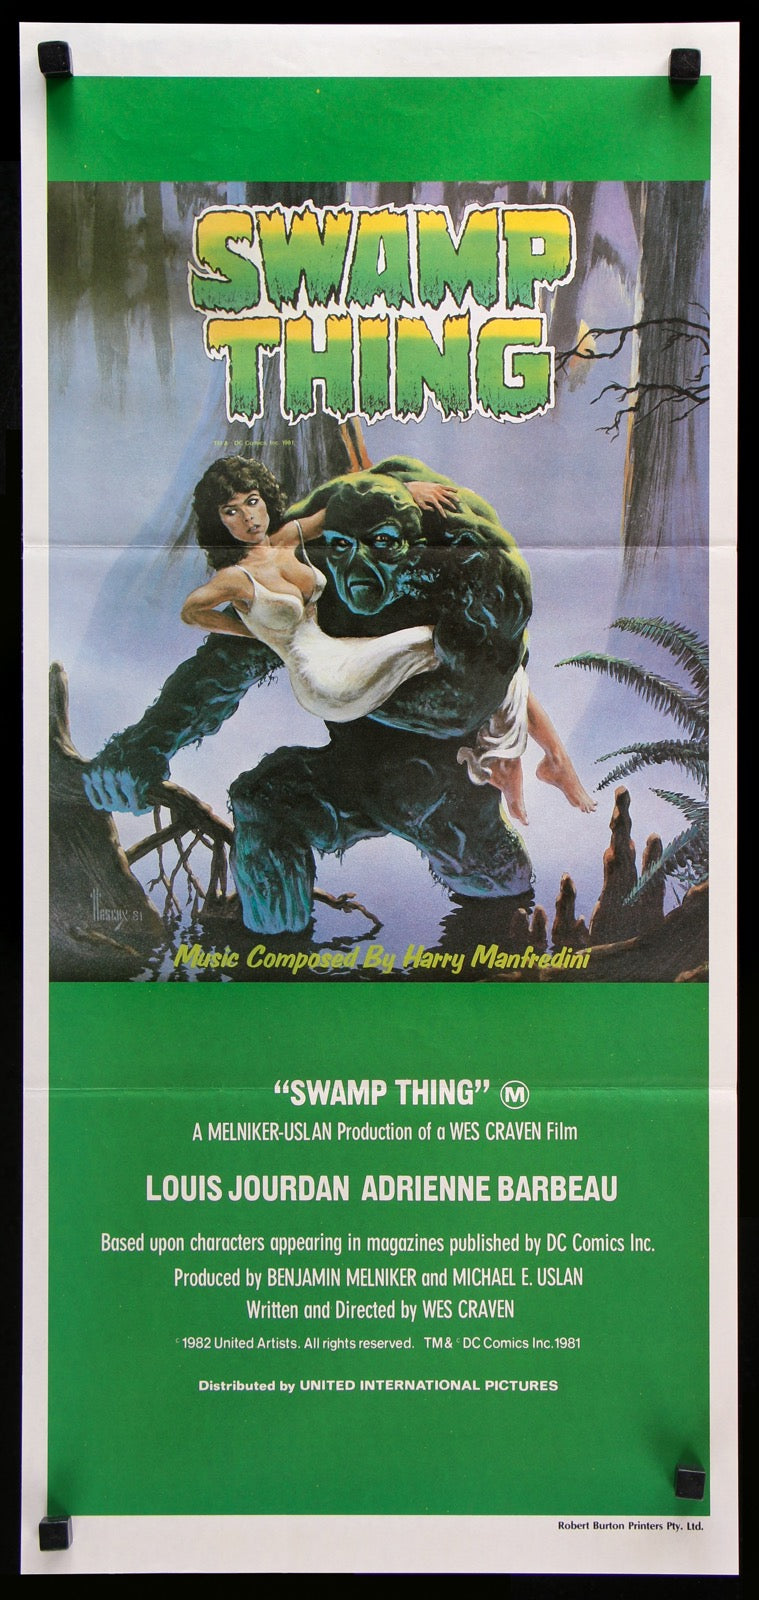 Swamp Thing (1982) original movie poster for sale at Original Film Art